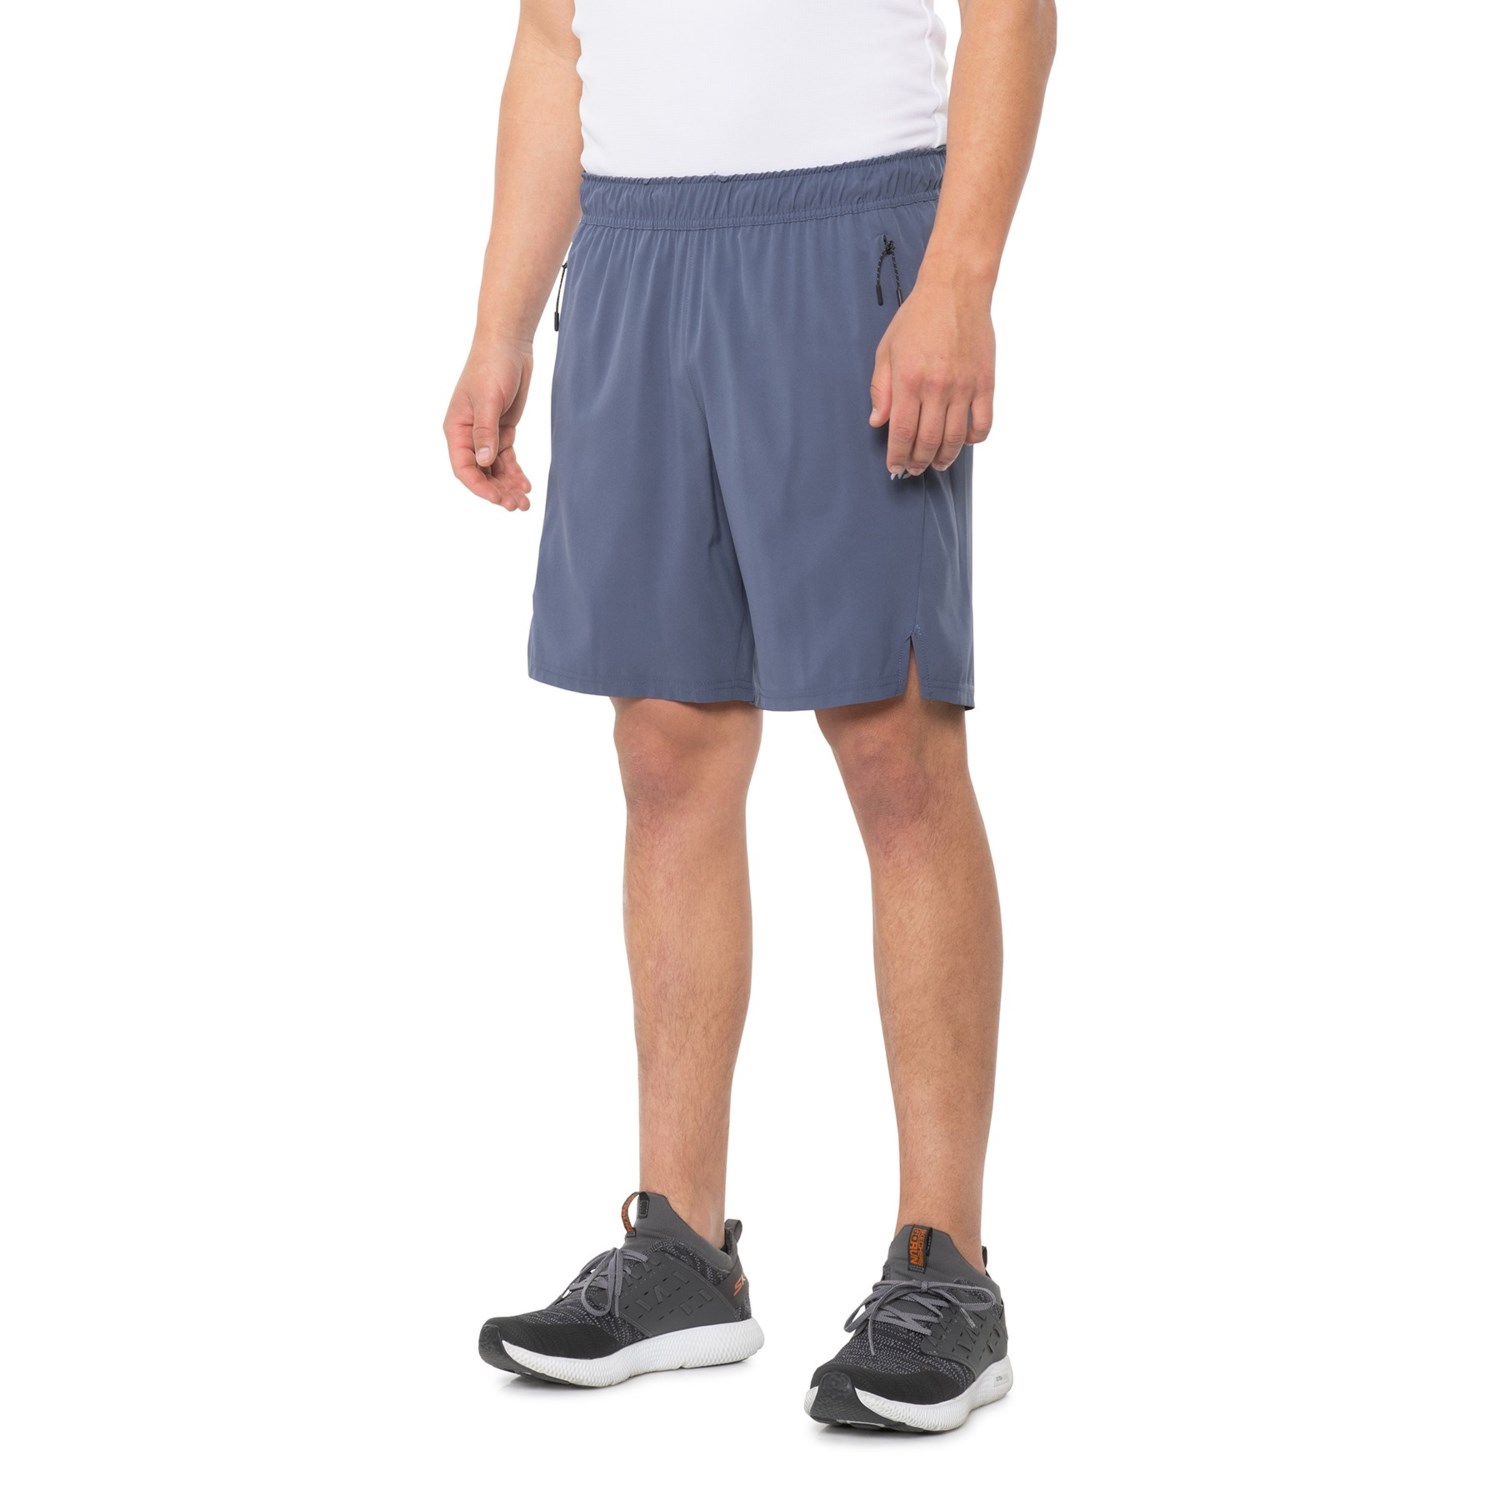 Eddie Bauer Motion Woven Shorts (For Men) - Save 37%